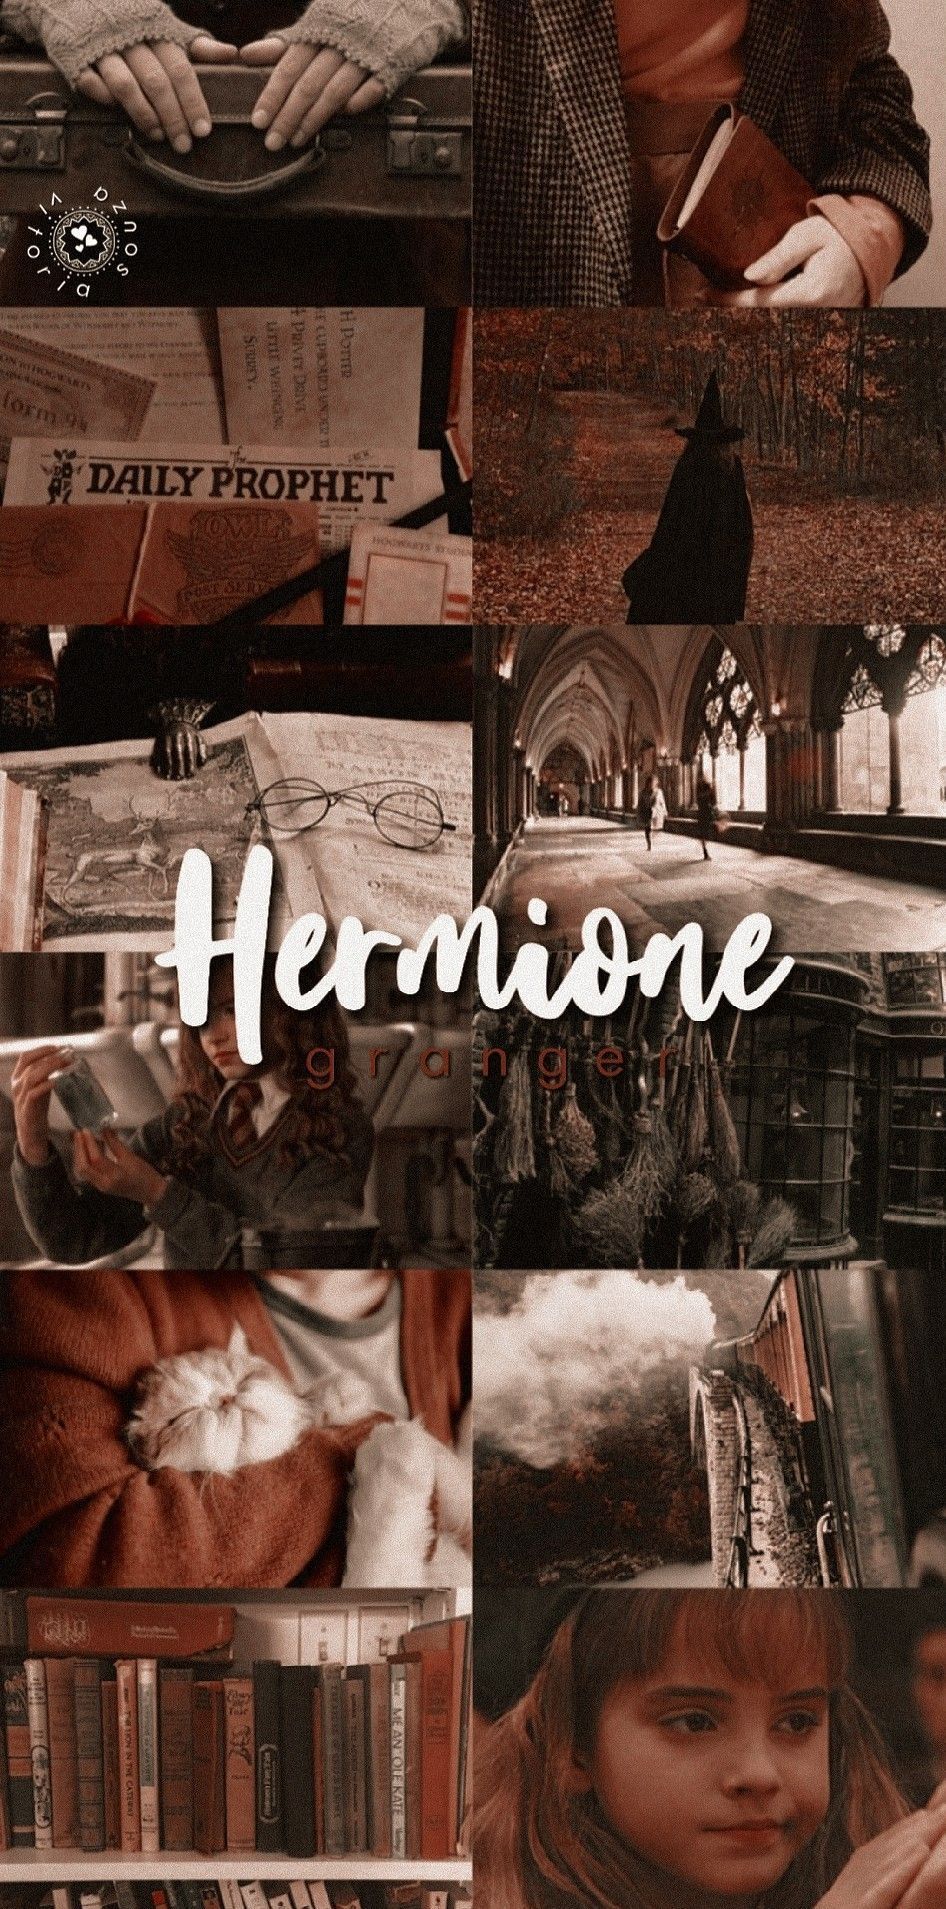 Lockscreen Aesthetic Hermione Granger. Harry potter wallpaper, Harry potter aesthetic, Harry potter cast